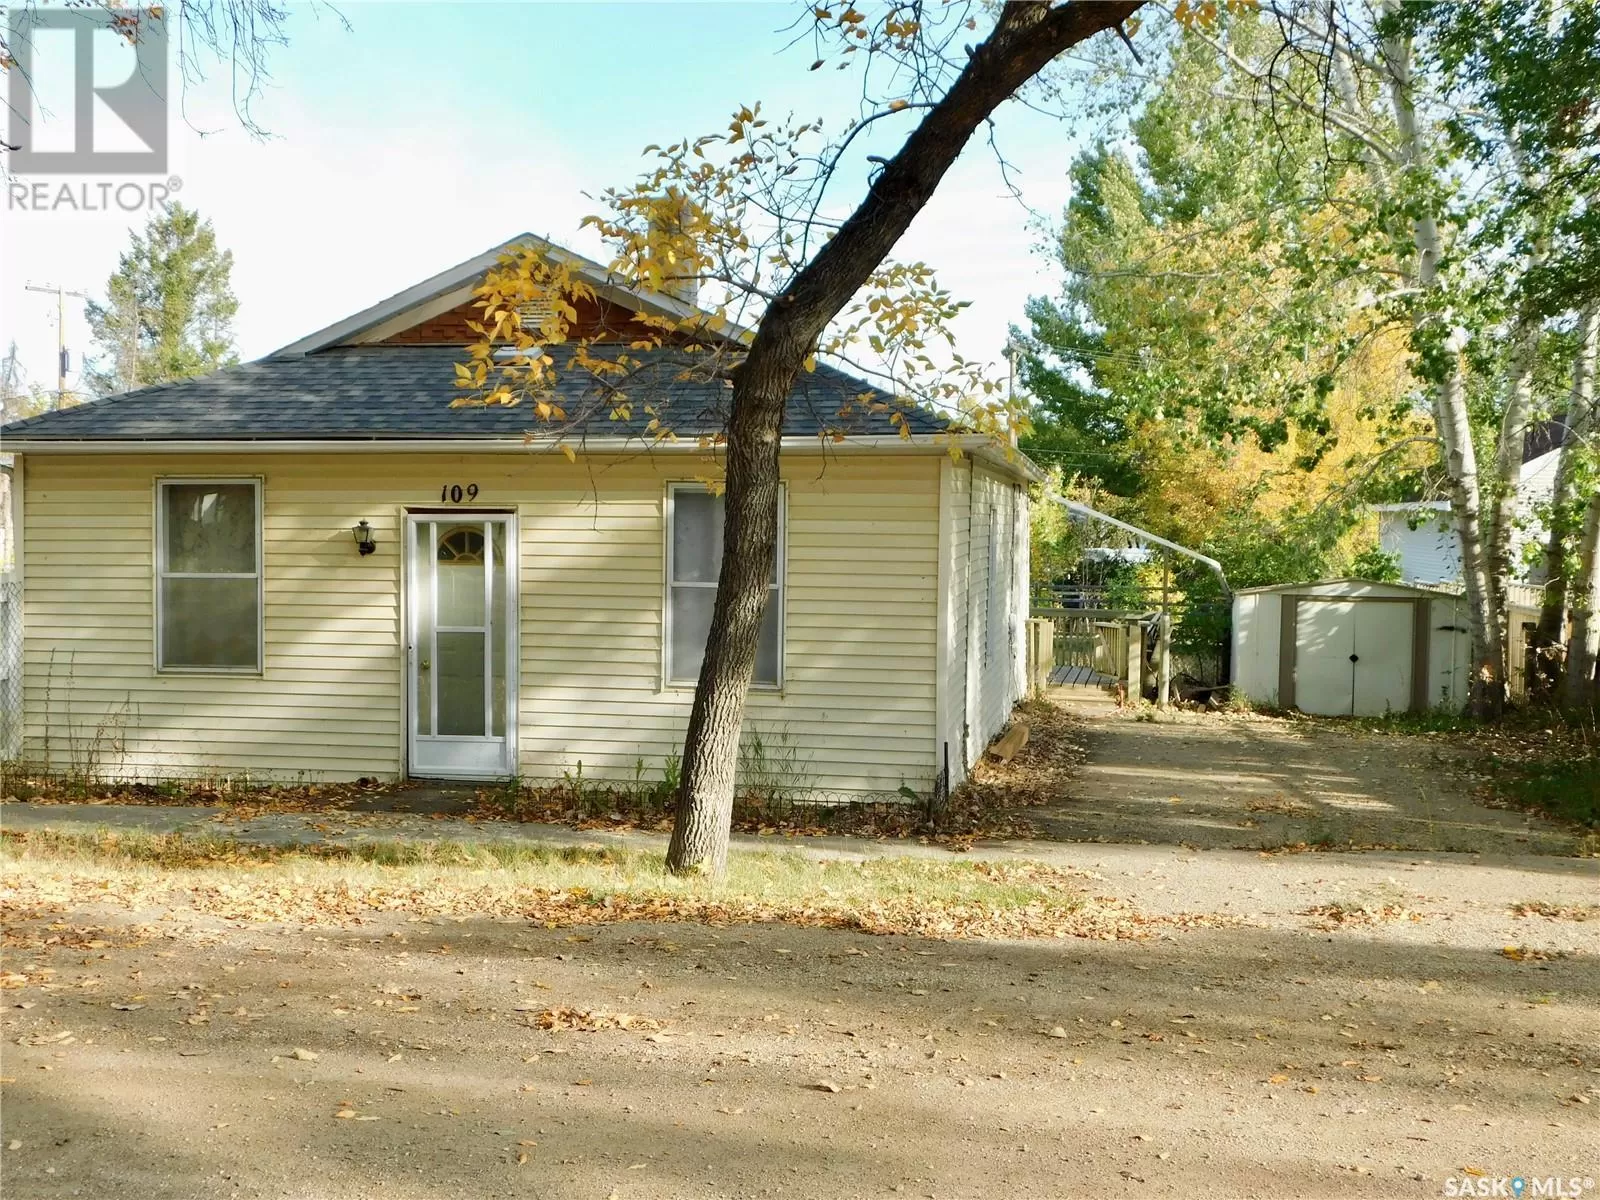 House for rent: 109 4th Avenue E, Mossbank, Saskatchewan S0H 3G0